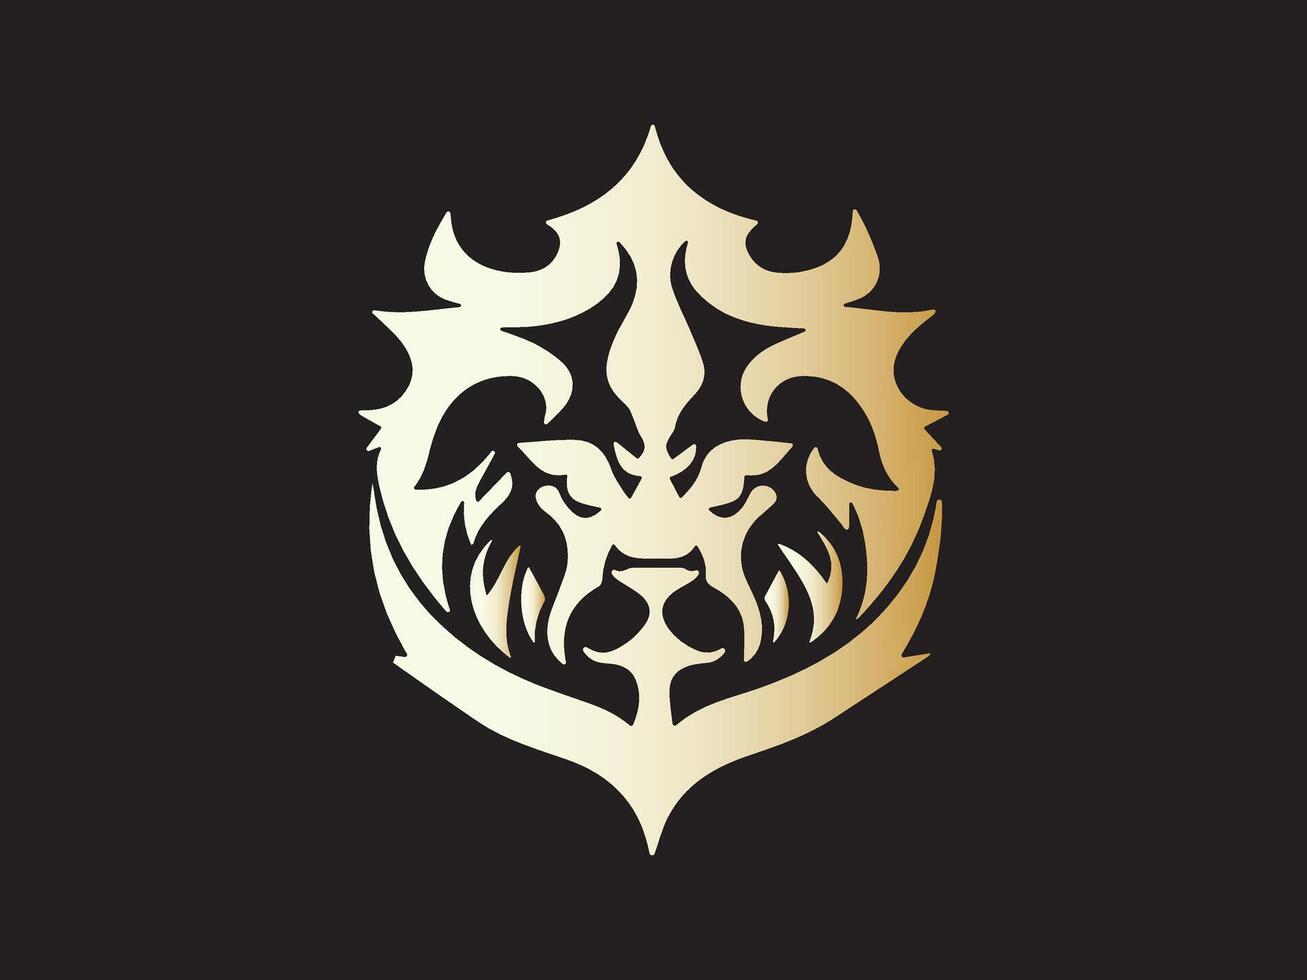 Angel lion logo design icon symbol vector illustration.